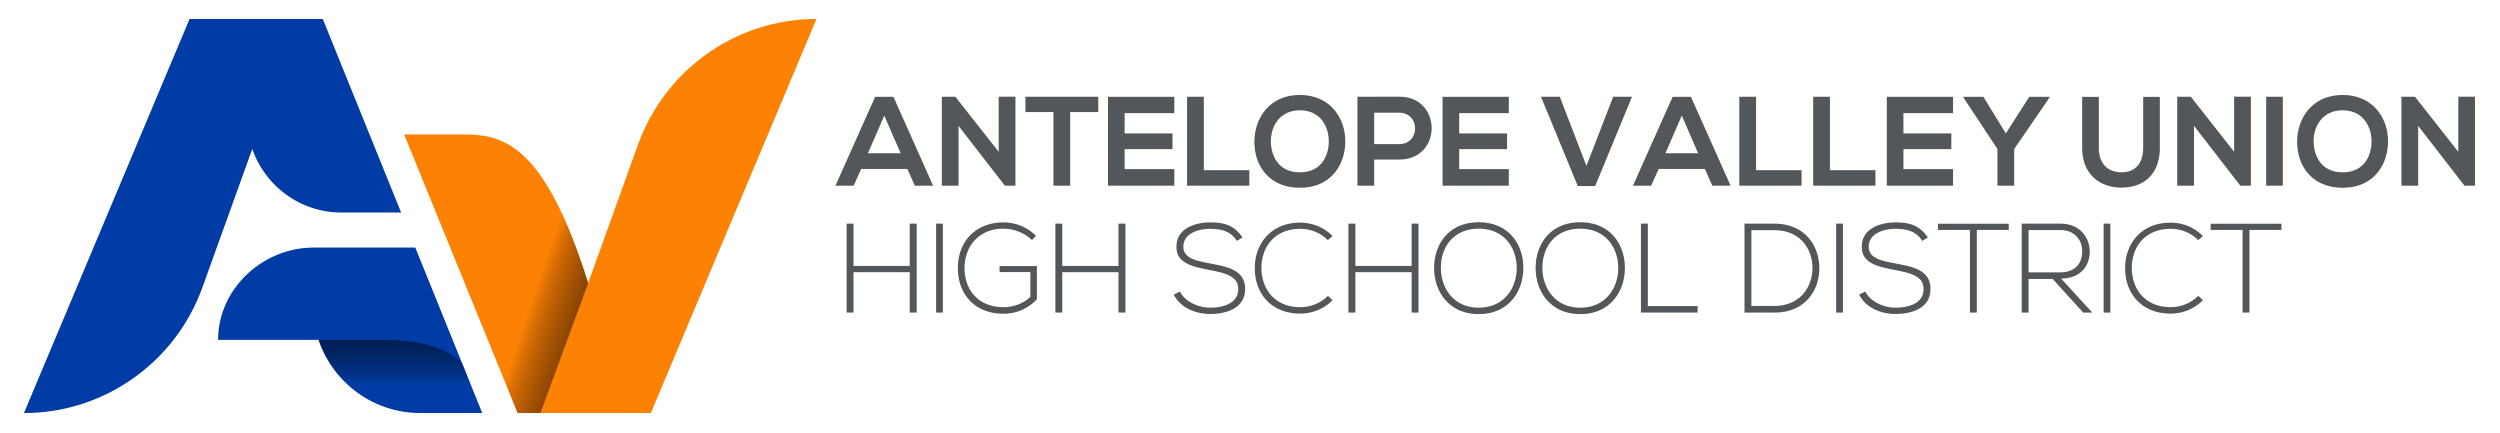 Antelope Valley Union High School District Badge